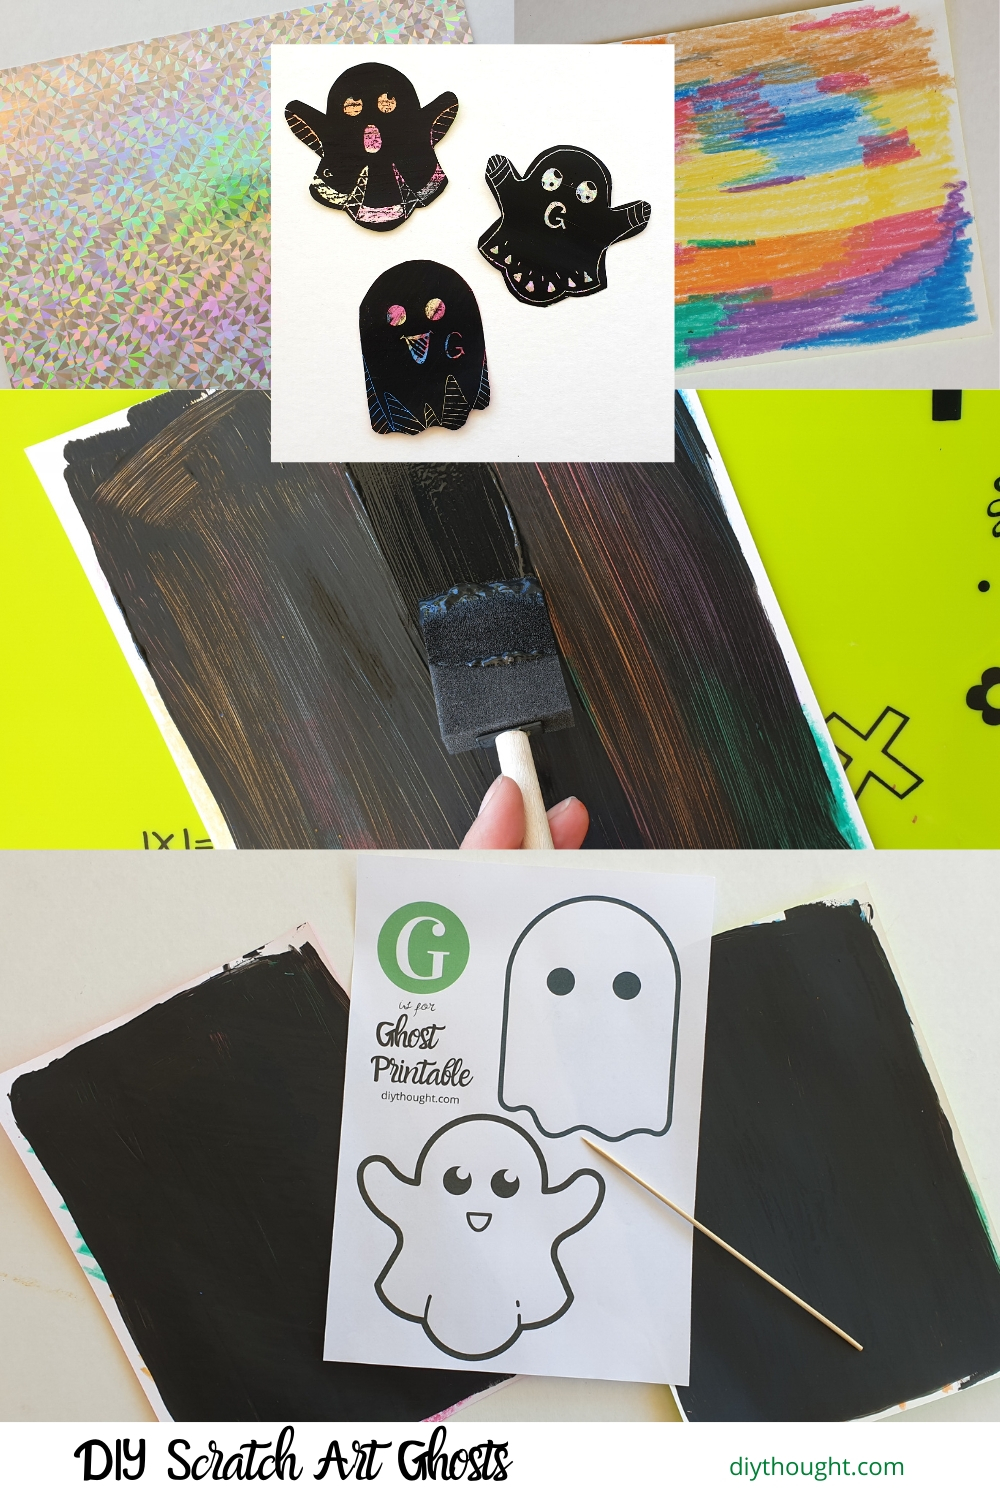 DIY scratch art ghosts. How to make scratch art.